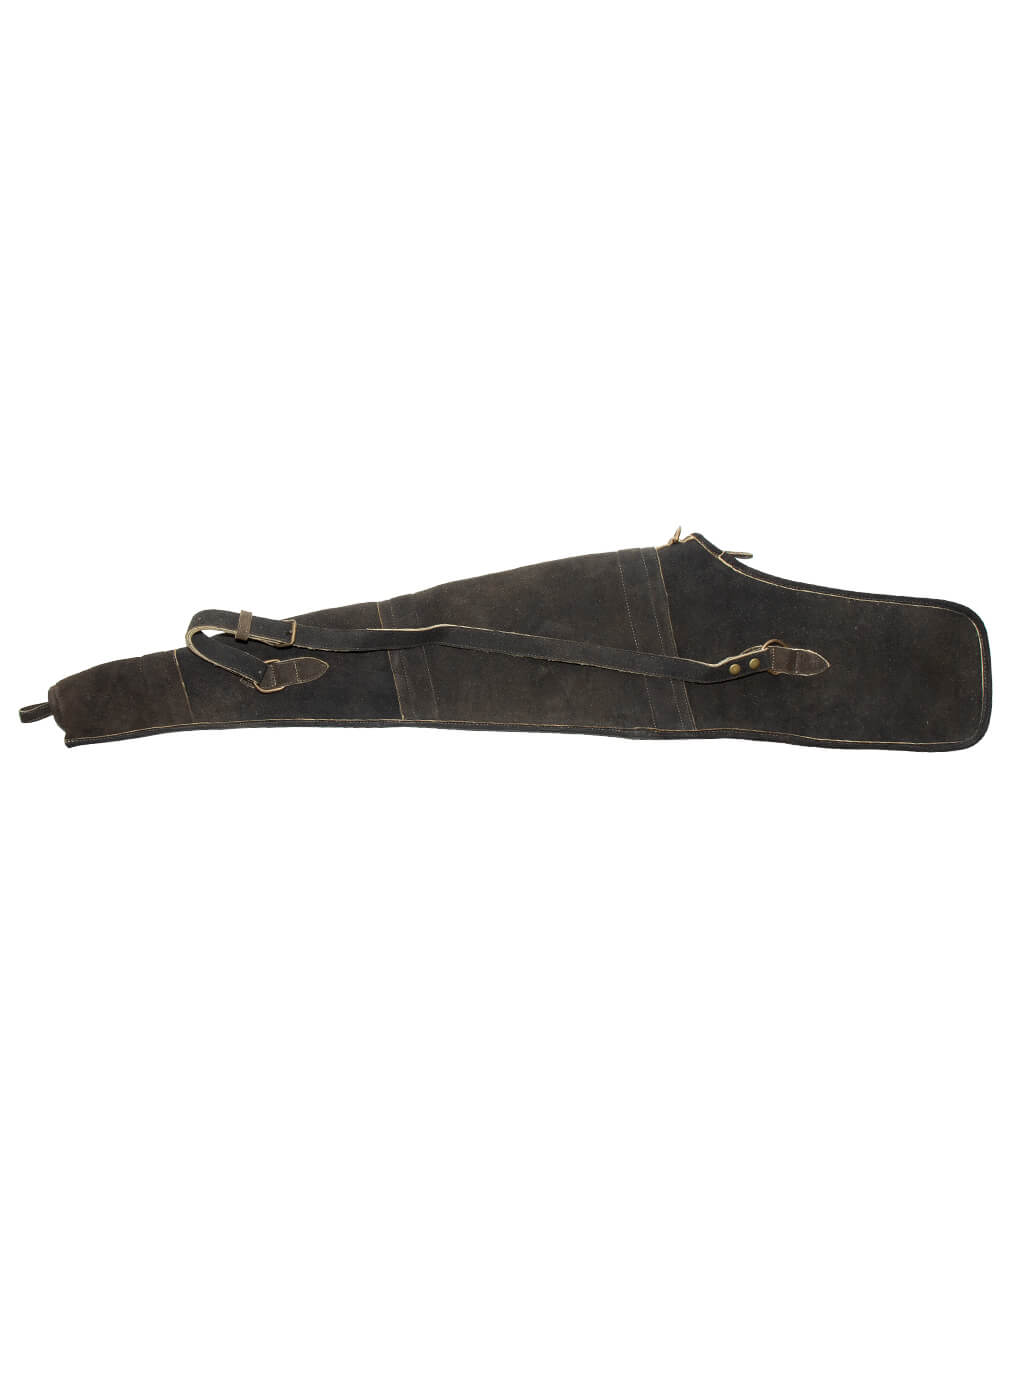 Deer Leather Rifle Bag, maple